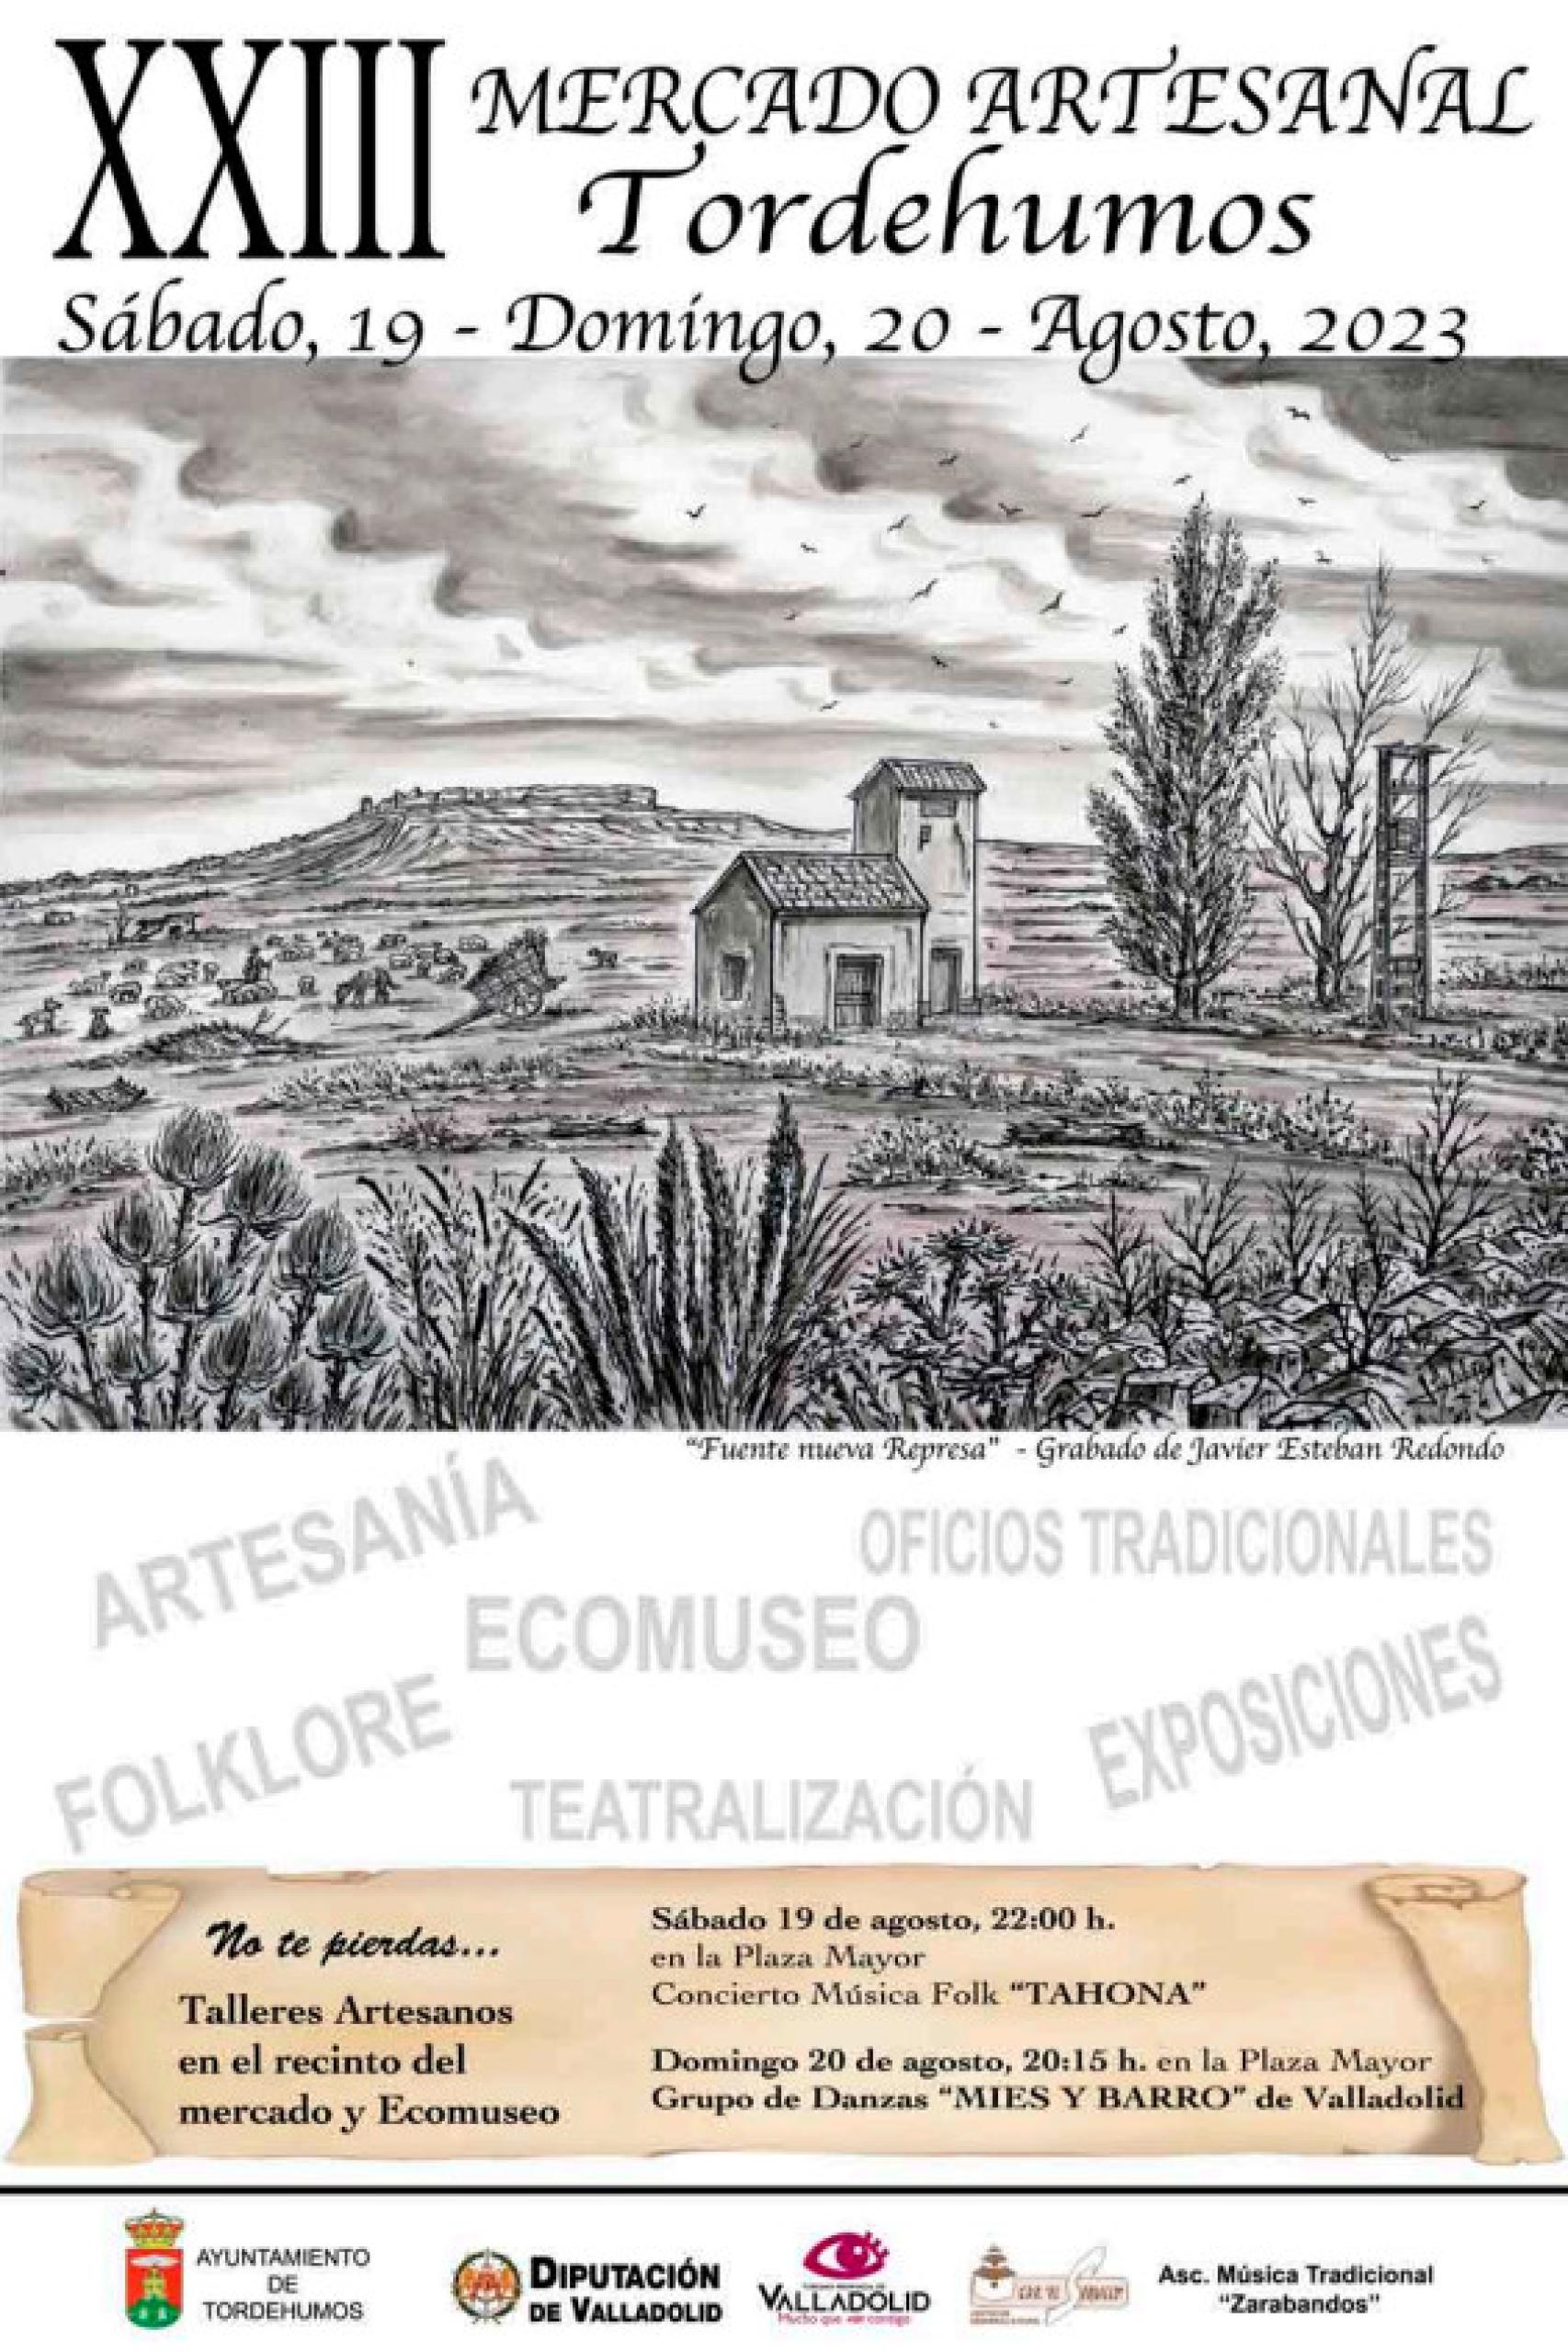 Cartel del XXIII Mercado Artesanal de Tordehumos